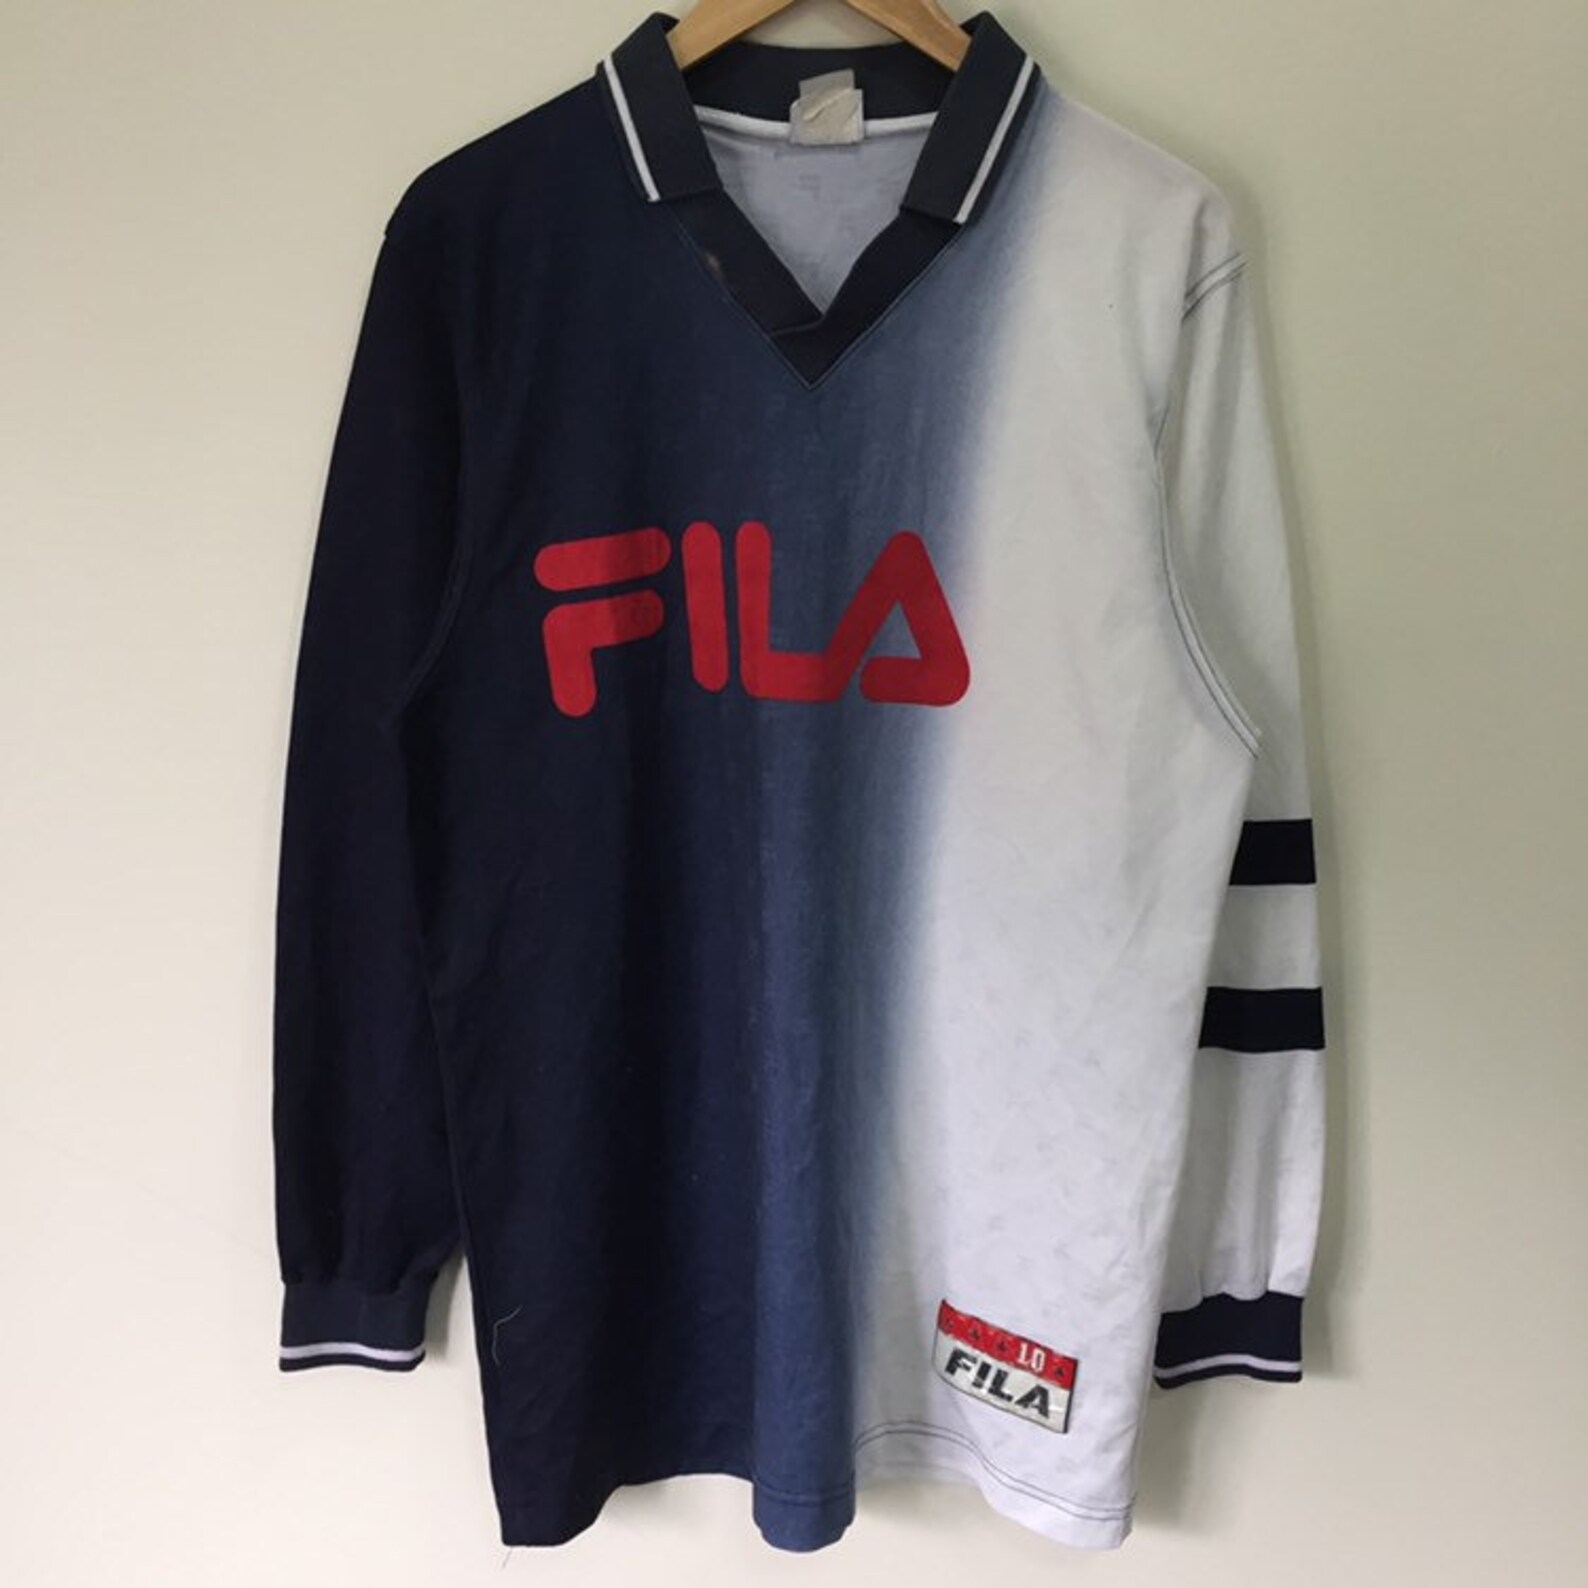 Vintage 90s Fila Polos T-Shirt size M | Etsy